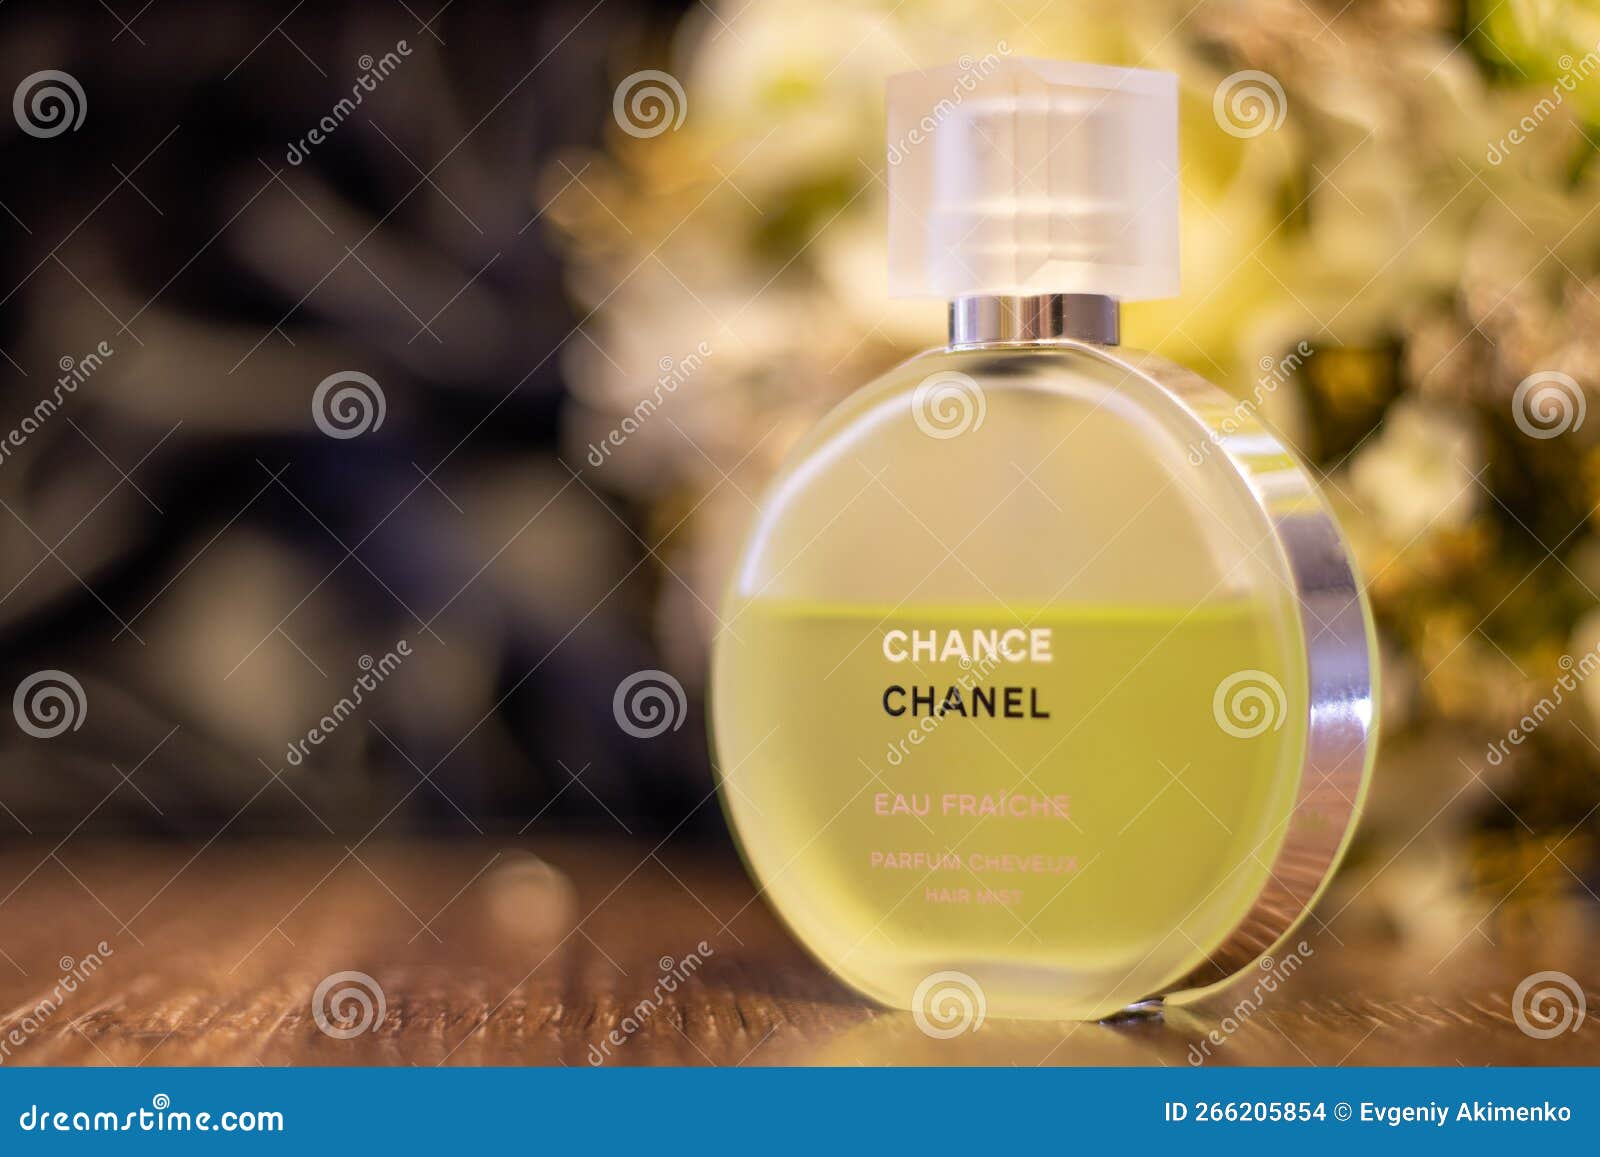 CHANEL CHANCE Parfum Cheveux Hair Mist